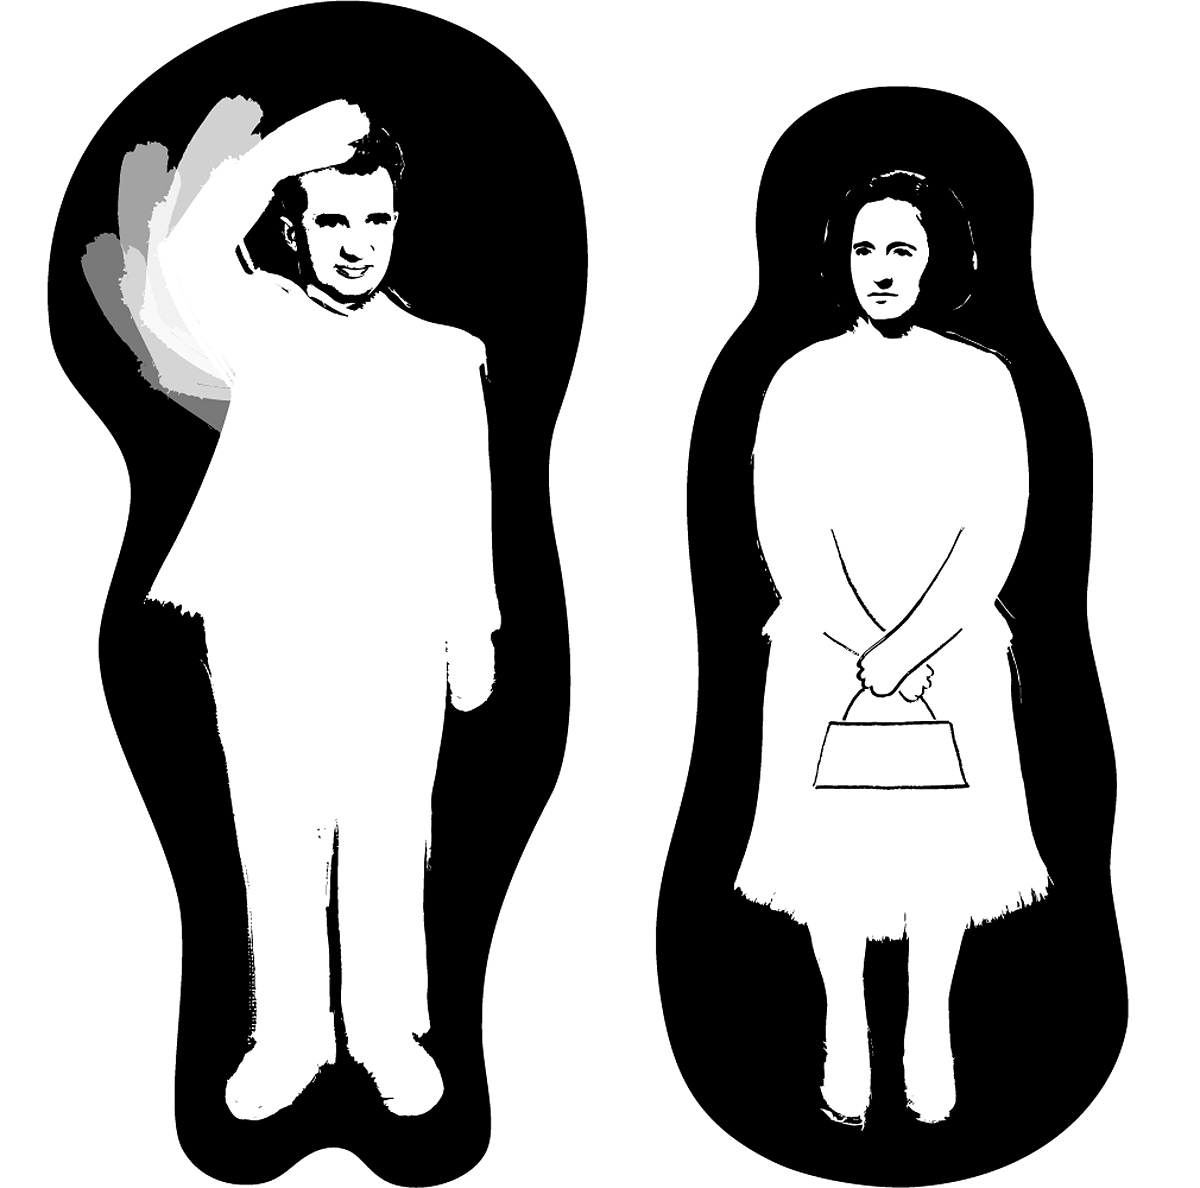 Caricature/illustration portraits of Nicolae & Elena Ceausescu